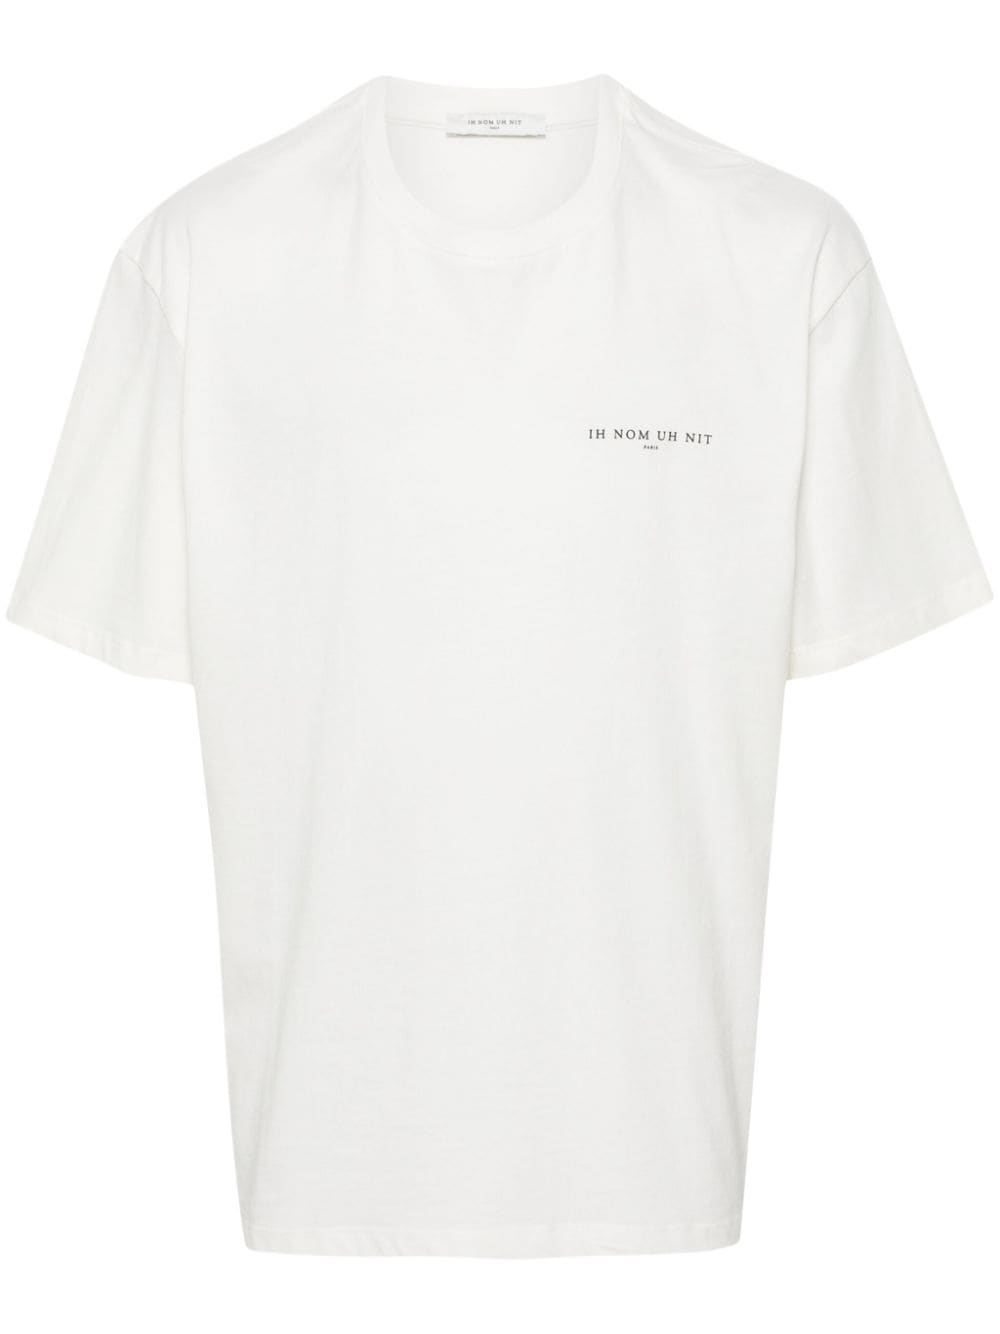 White T-shirt with logo writing